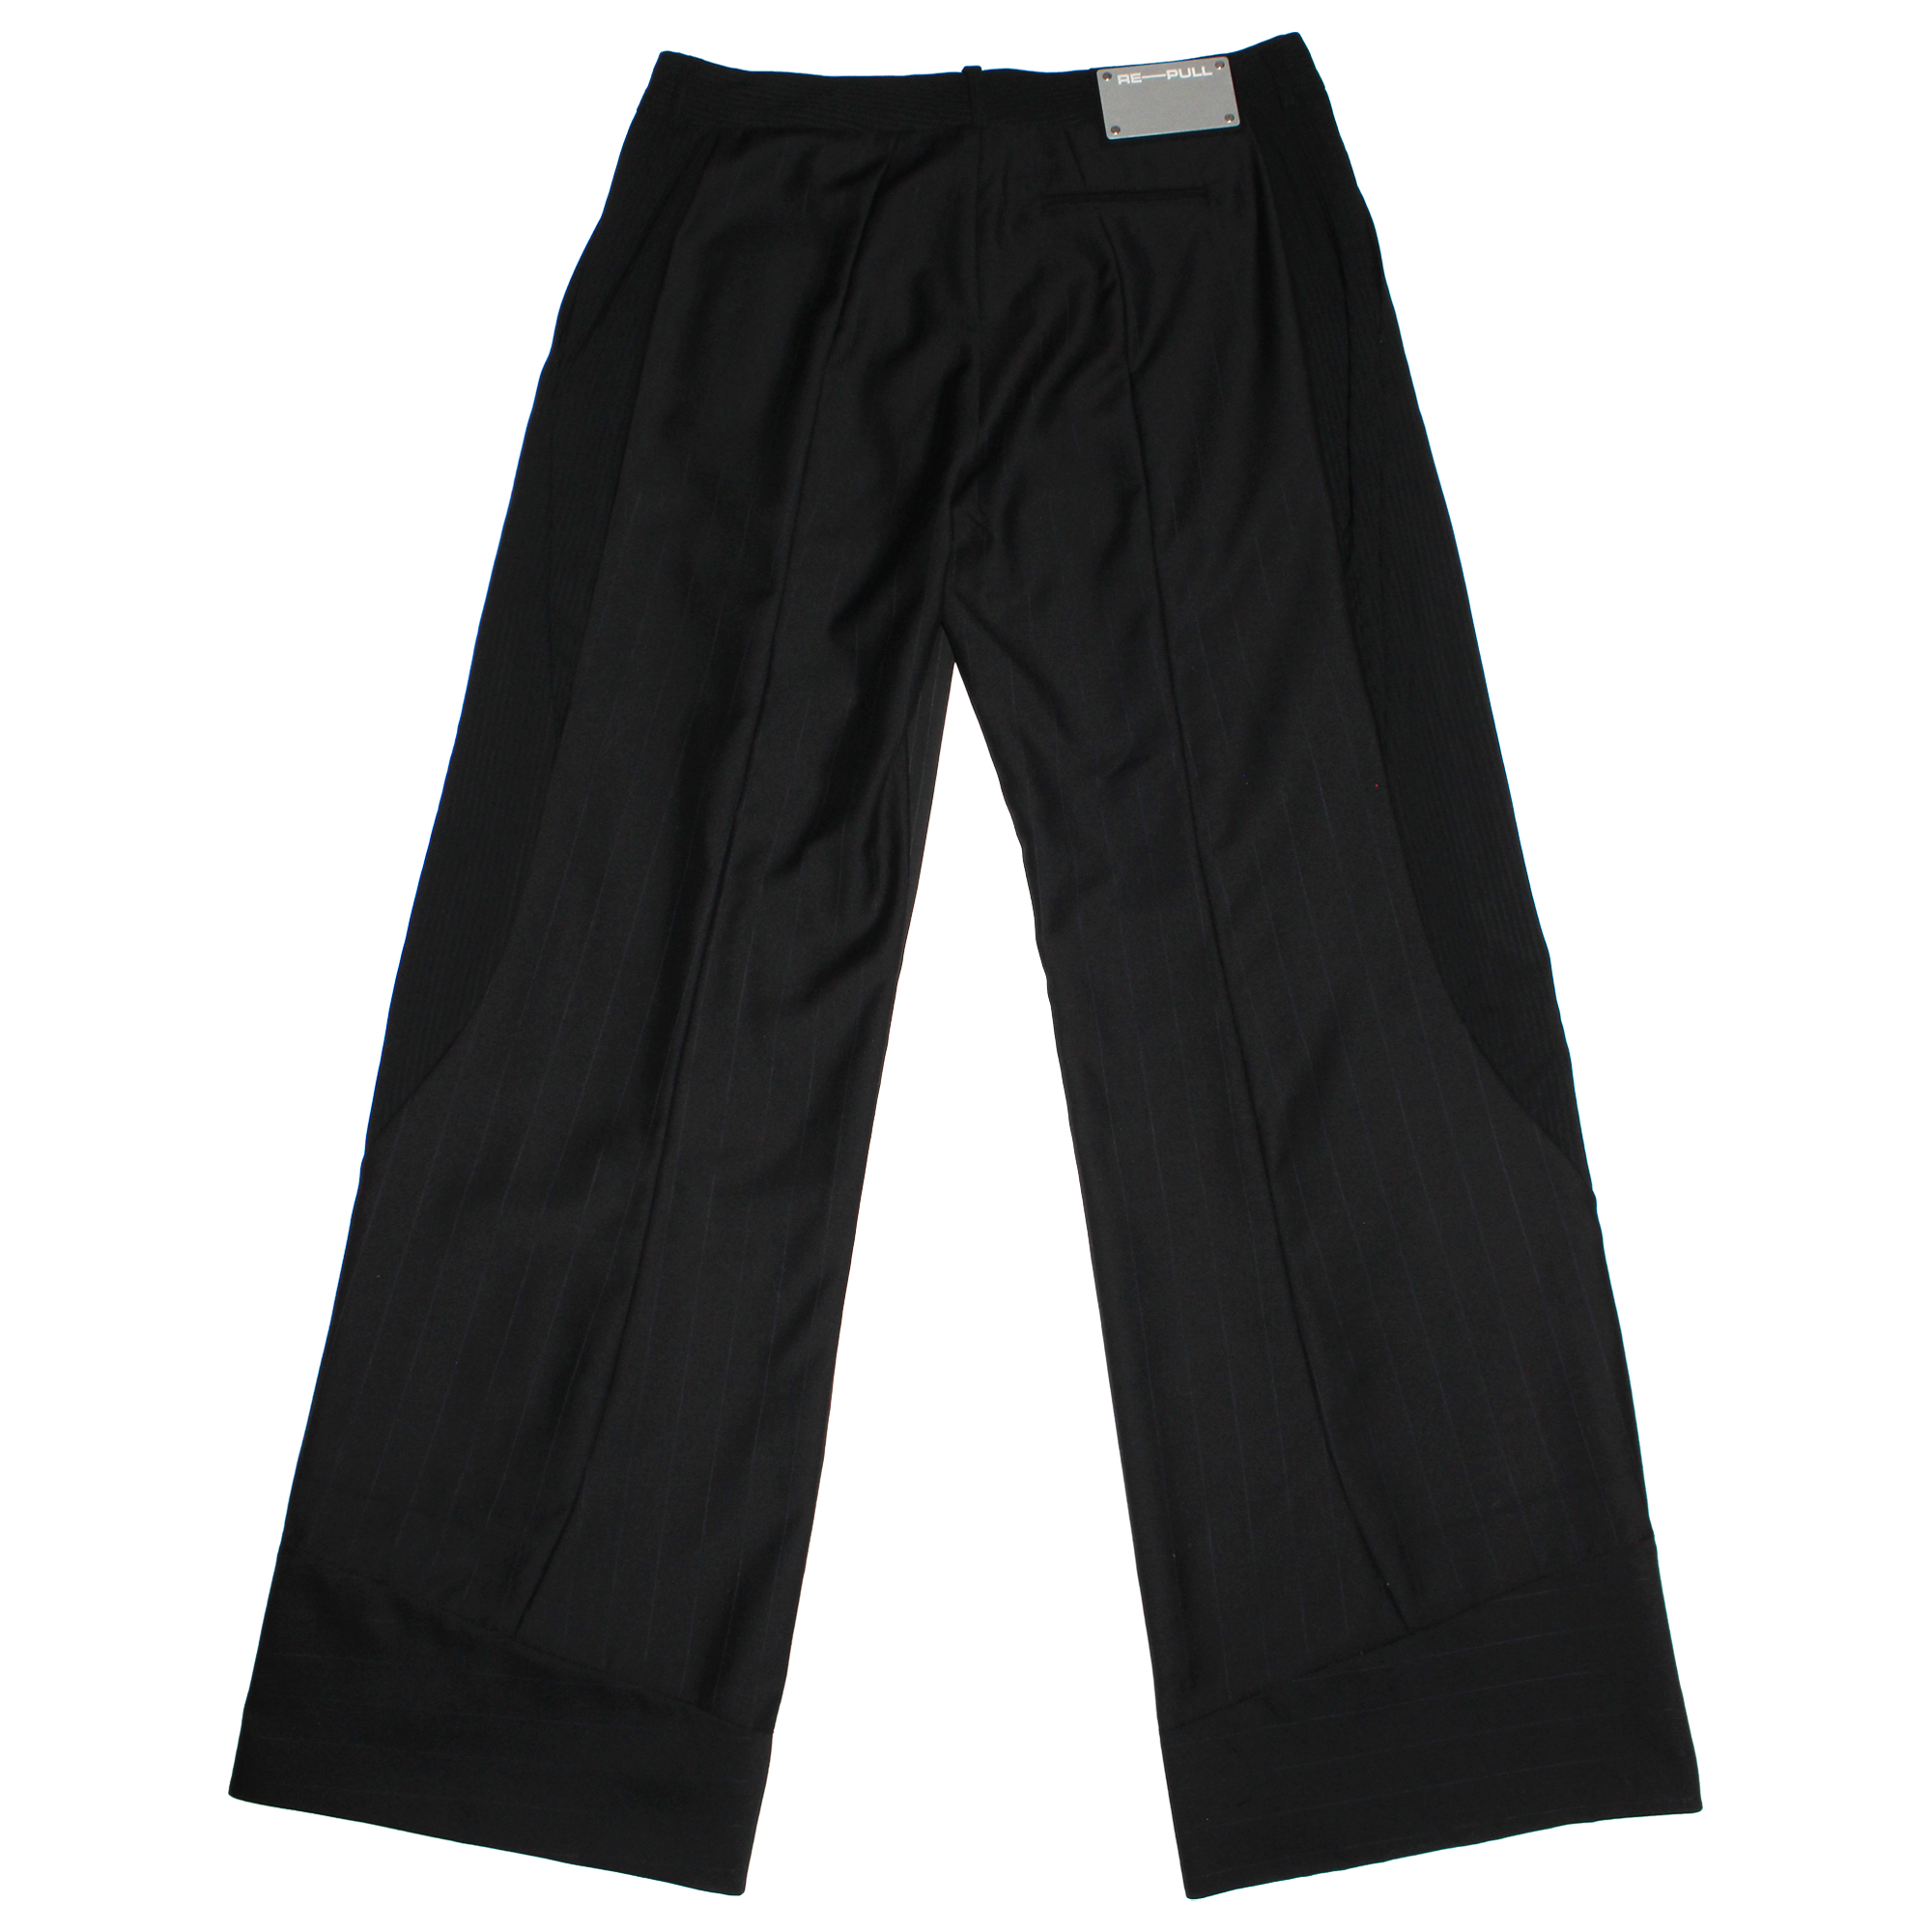 Pinstripe Sumi Paneled Trouser - Size 3